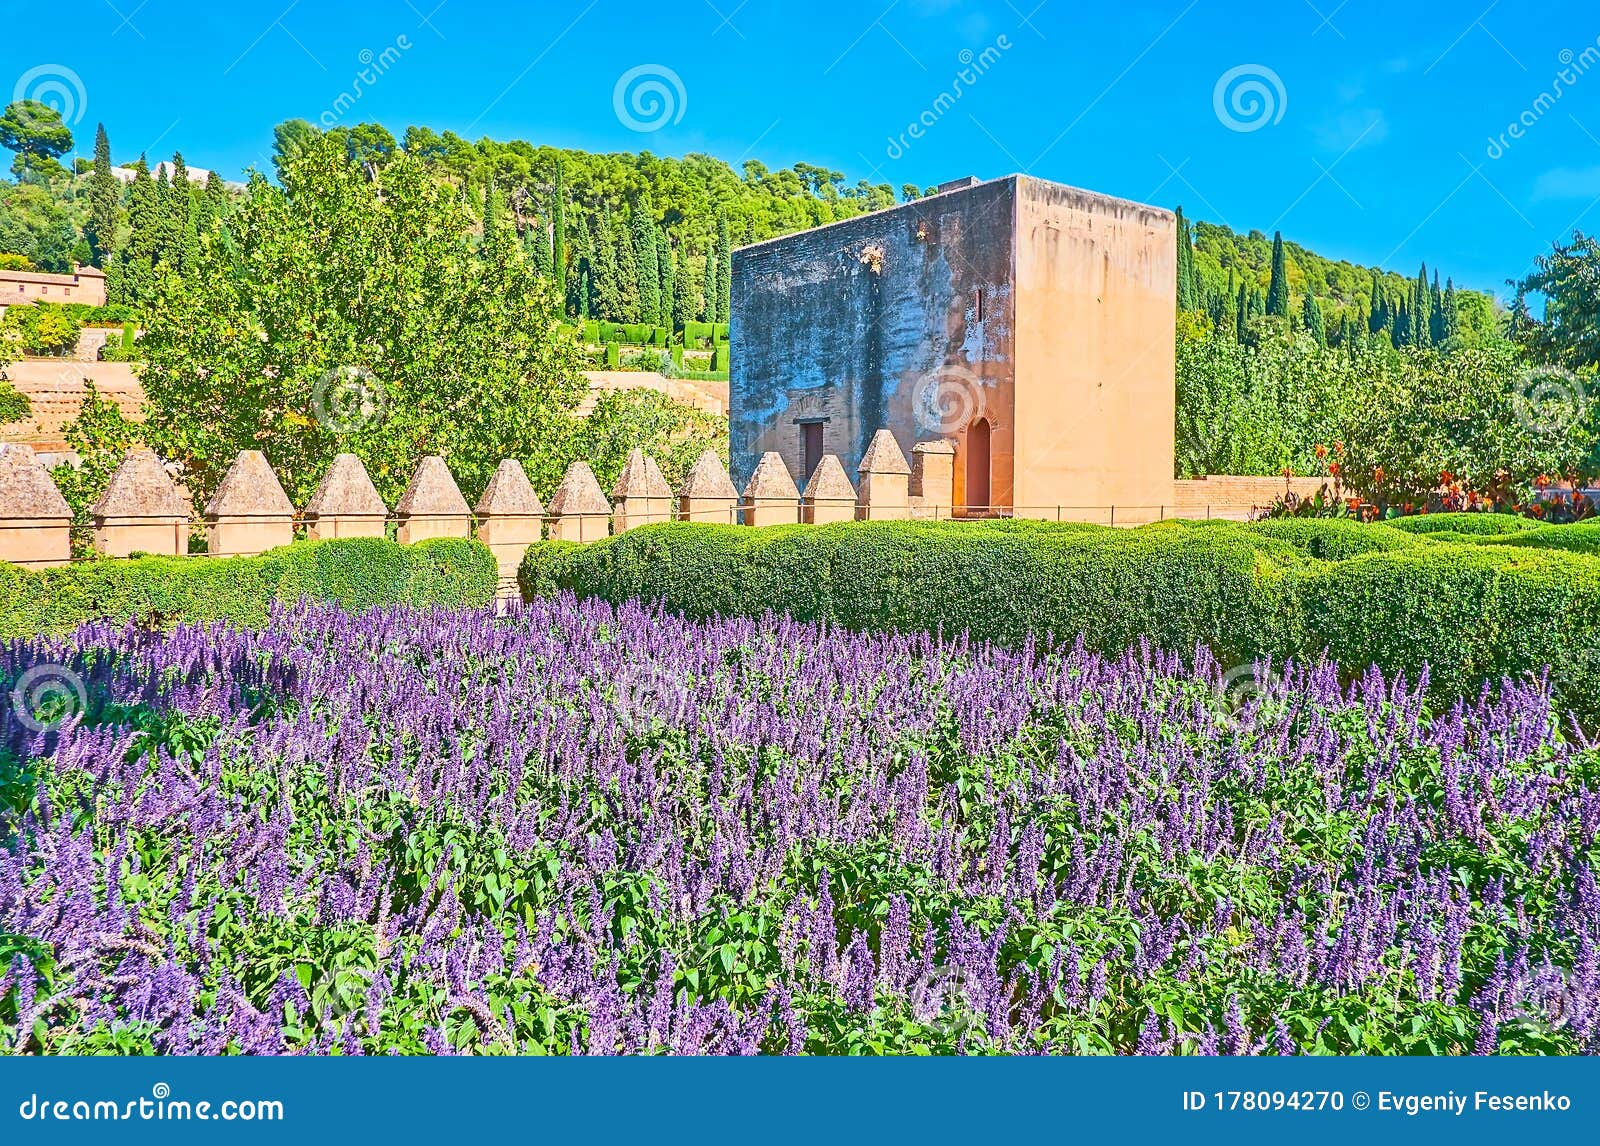 ultra violet salvia in alhambra garden, granada, spain